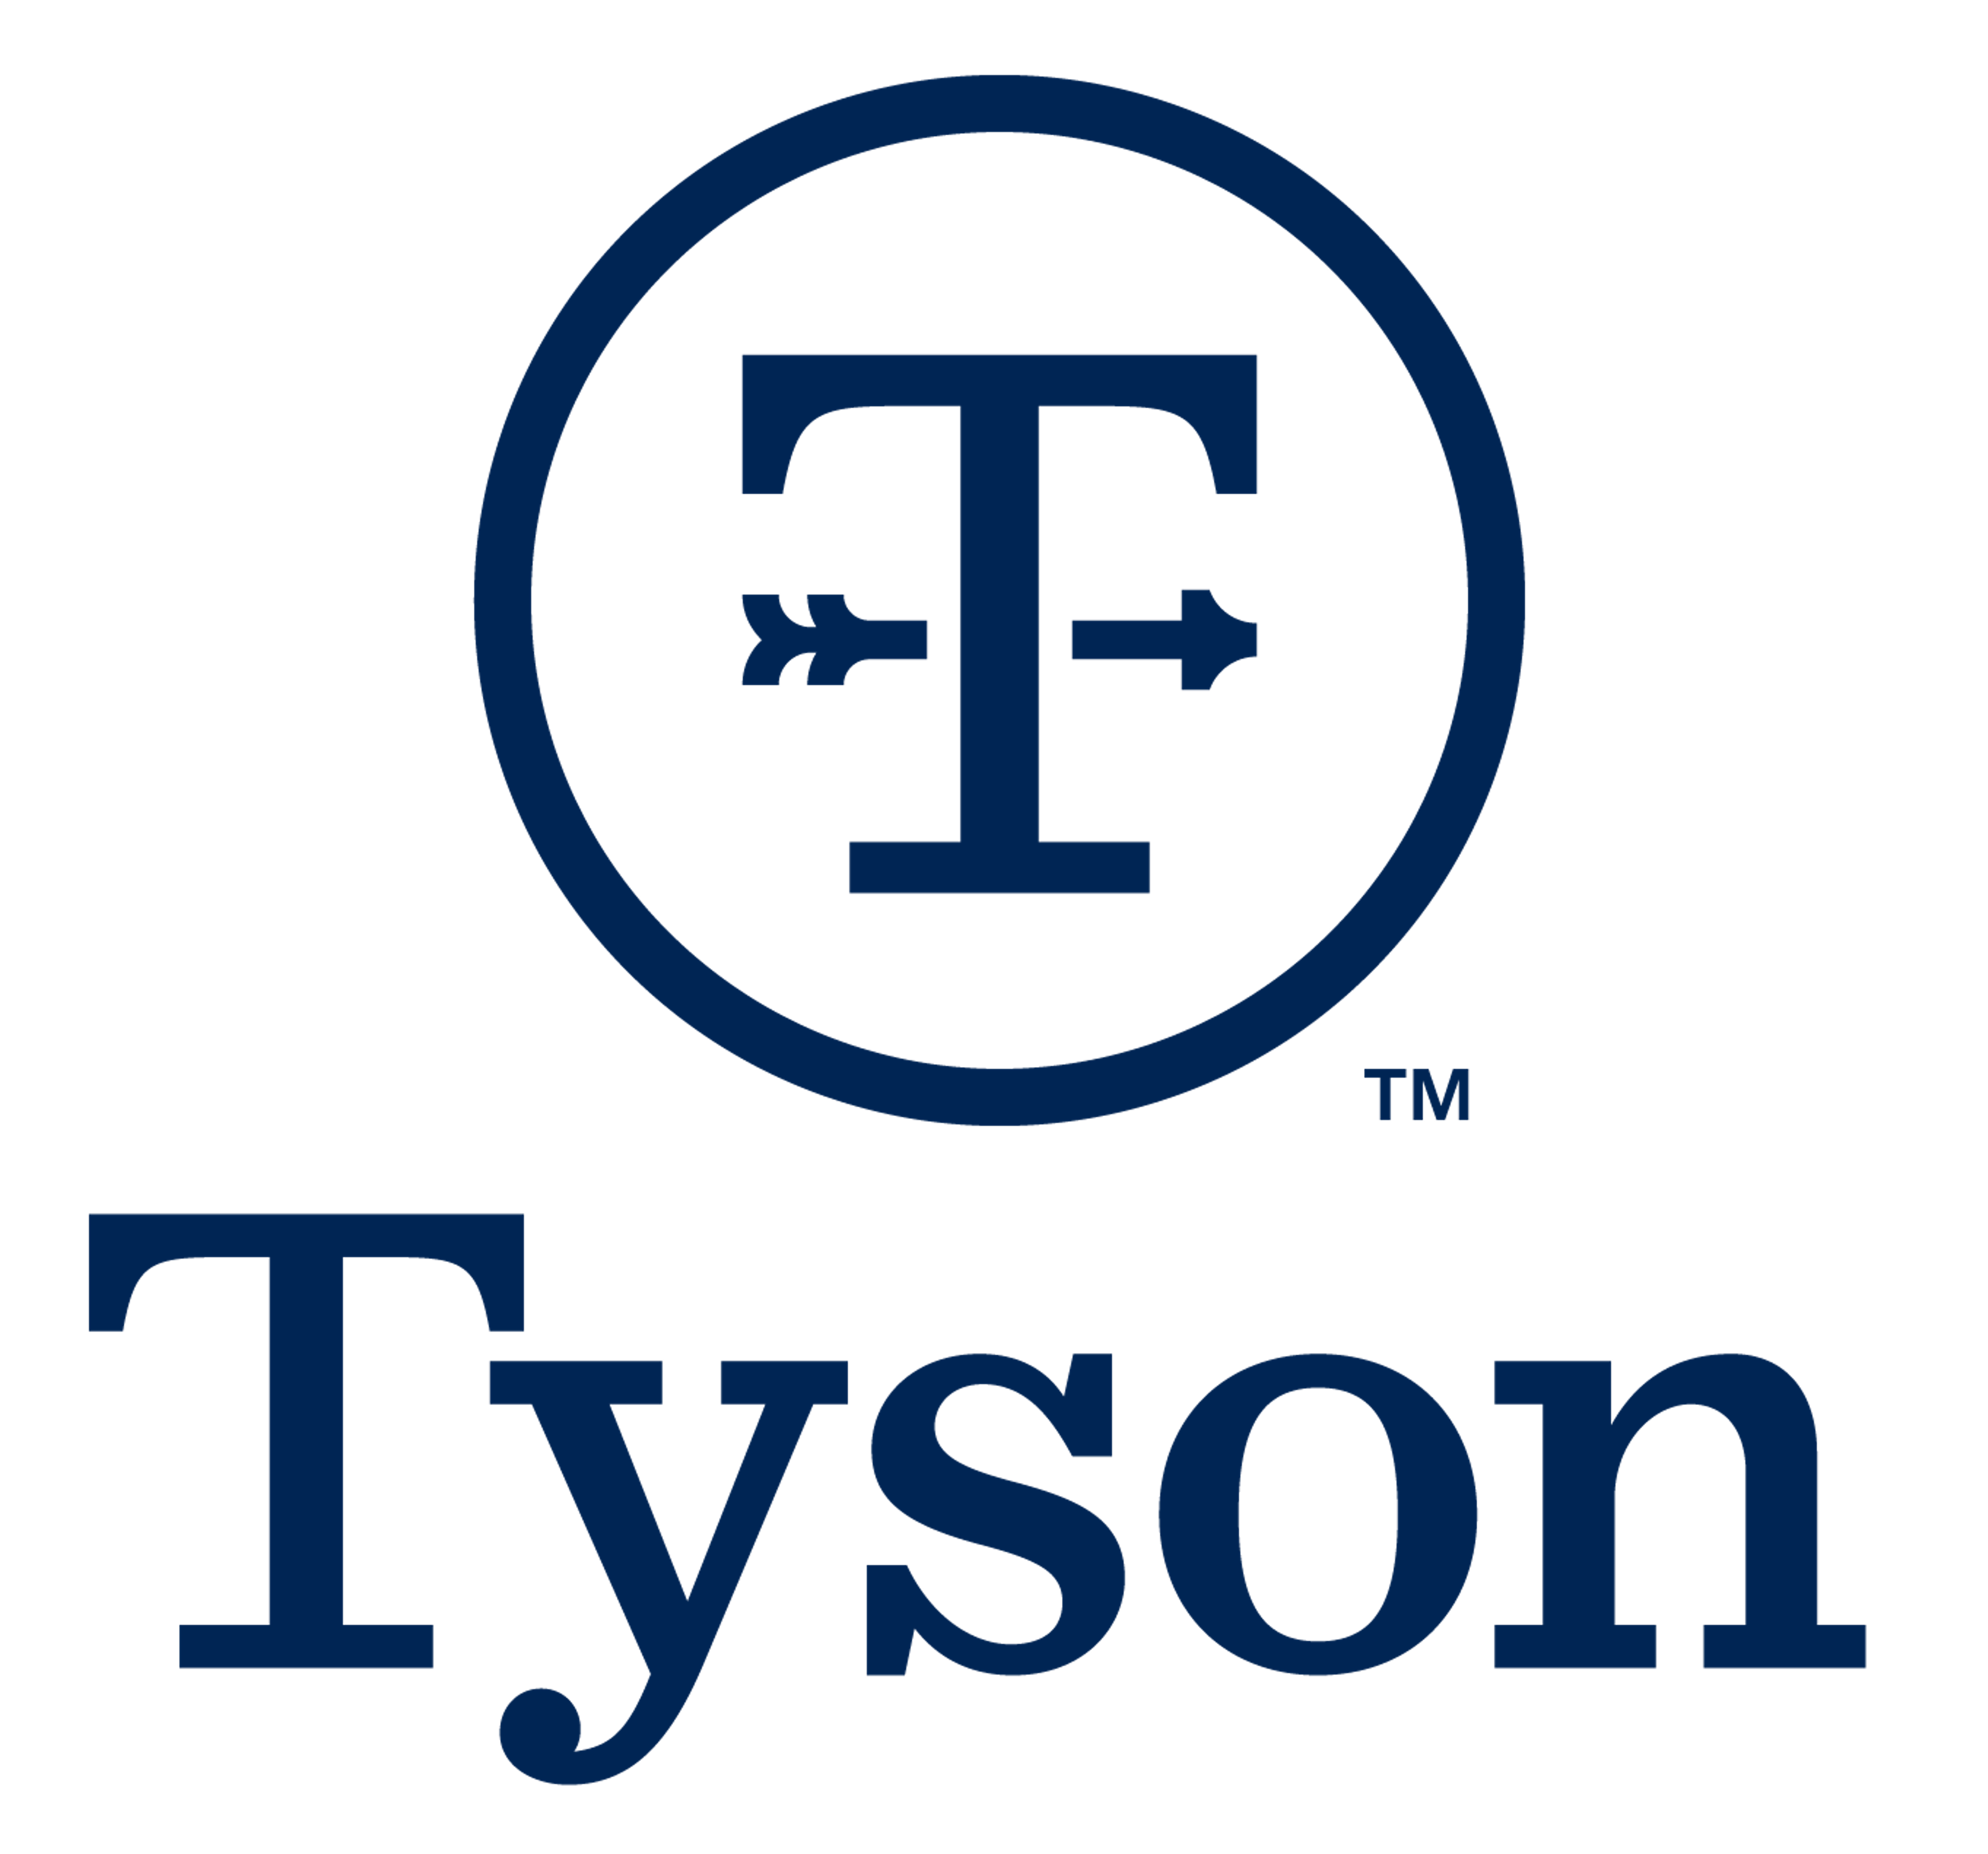 Tyson Food logo